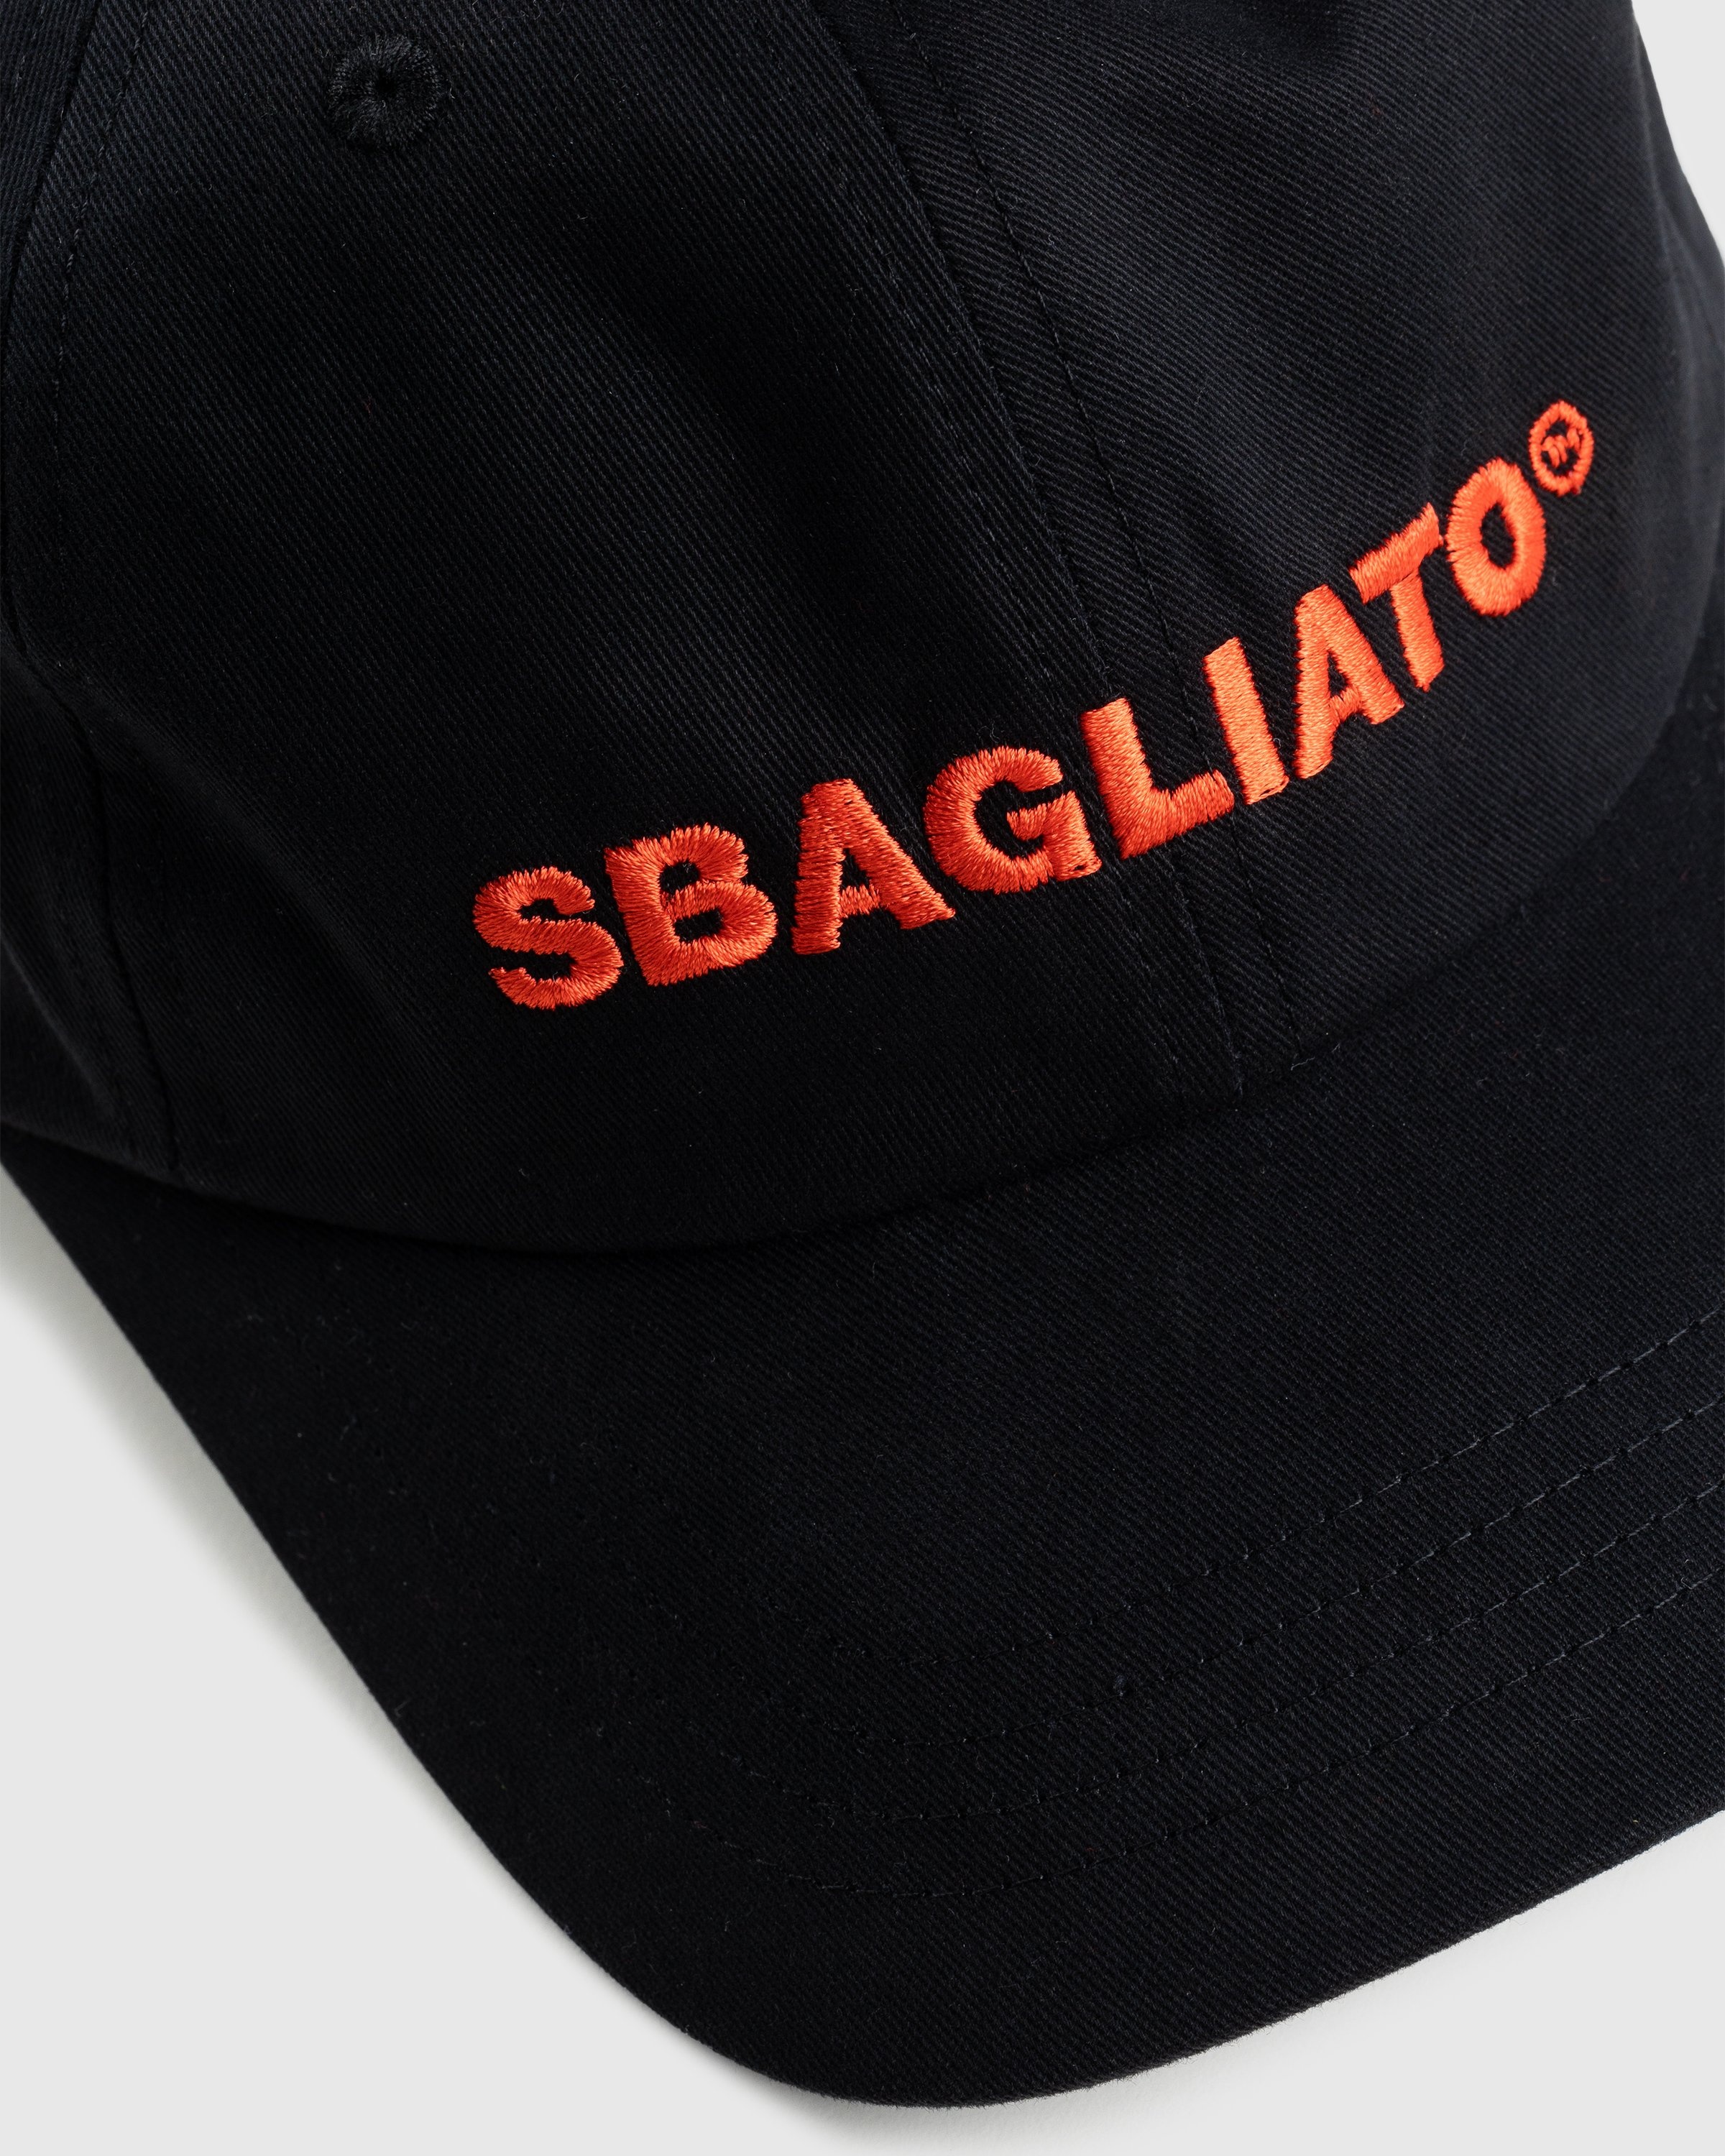 Bar Basso x Highsnobiety – Sbagliato Cap Black - Hats - Black - Image 5